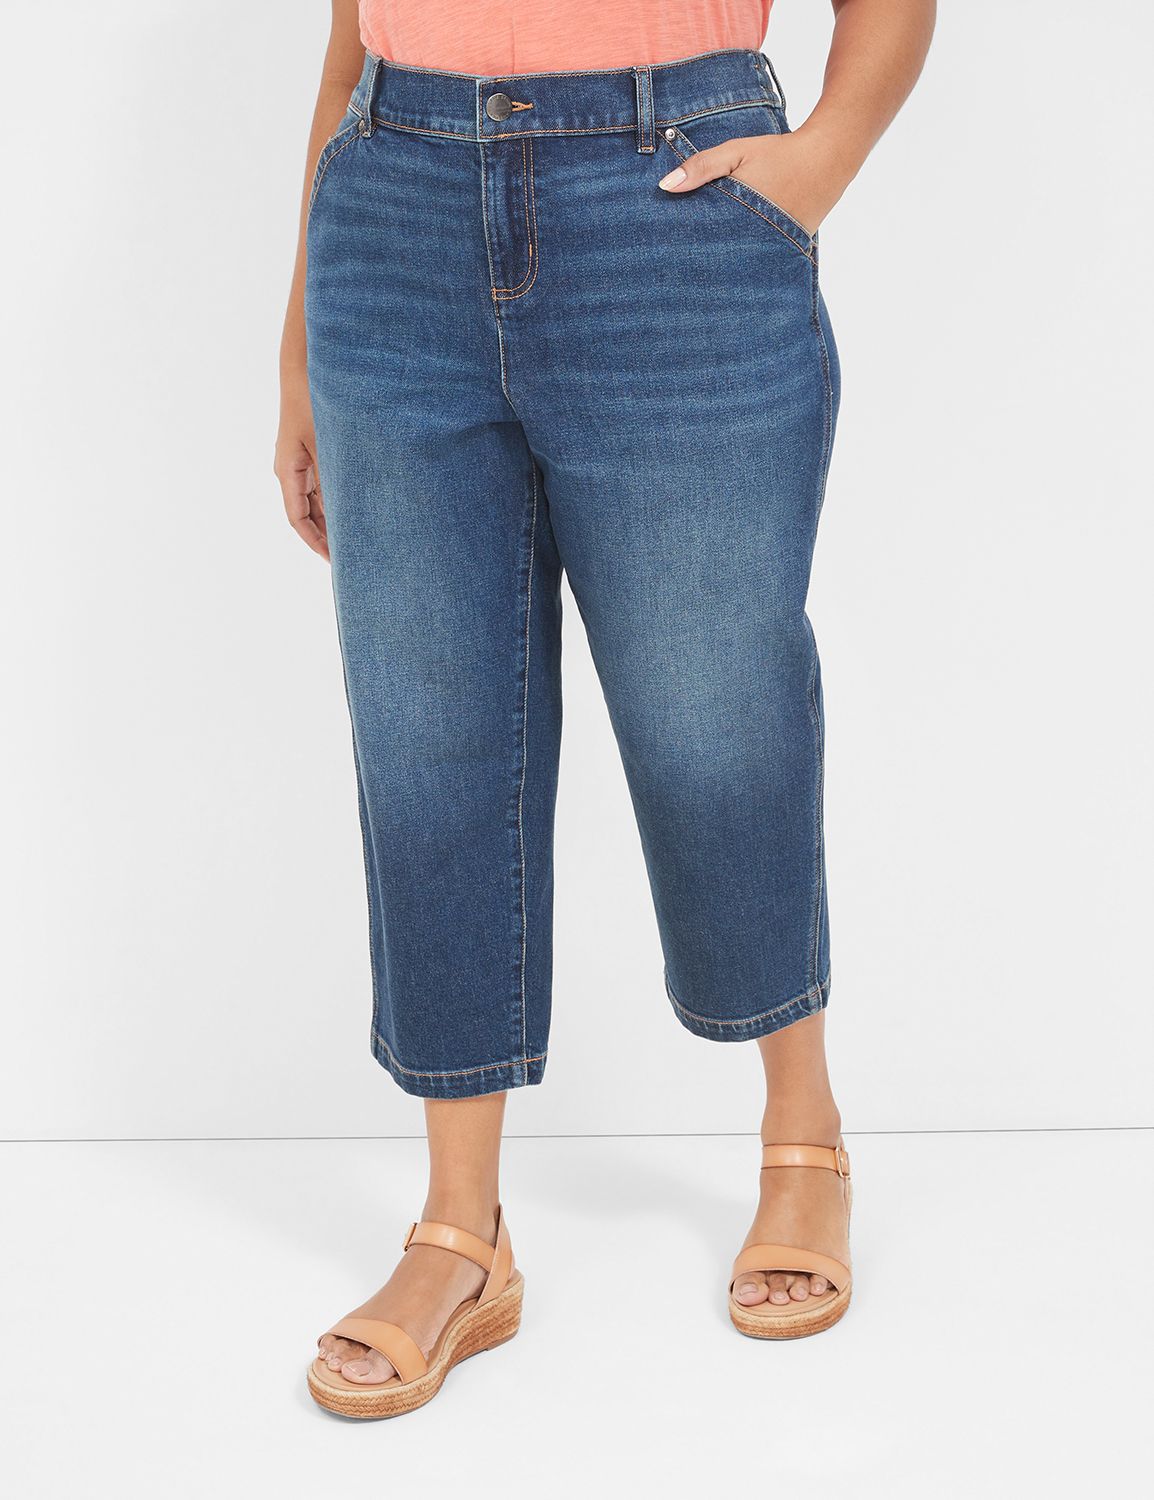 Lace Capri Pants Women's Plus Size High Waisted Pockets Cropped